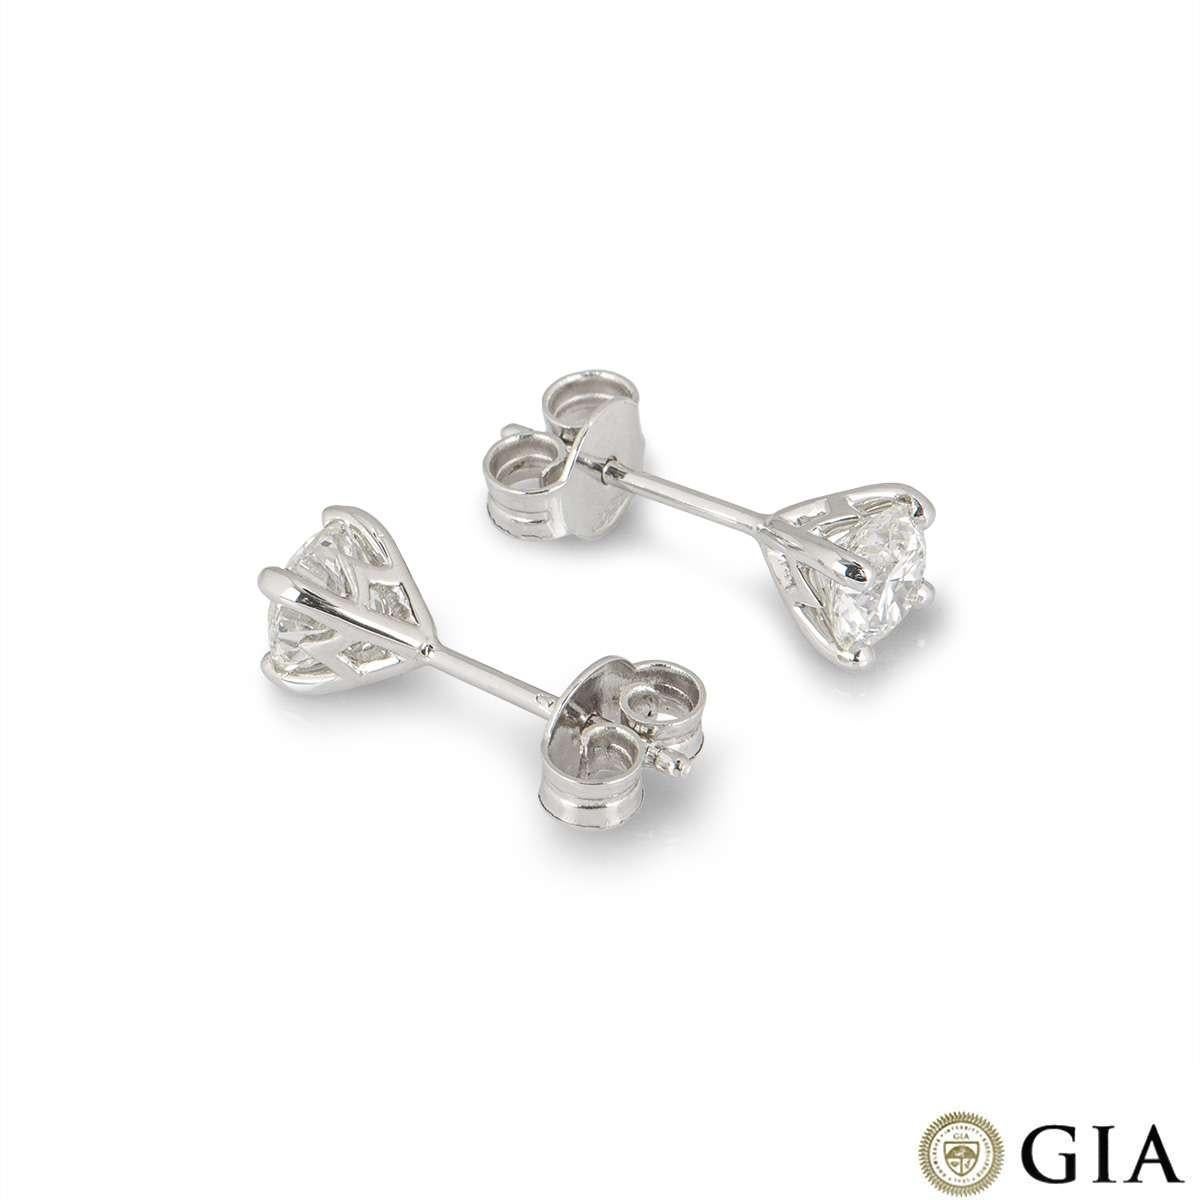 Round Cut GIA Certified Round Brilliant Cut Diamond Earrings 1.18ct tcw H/VS1/VS2